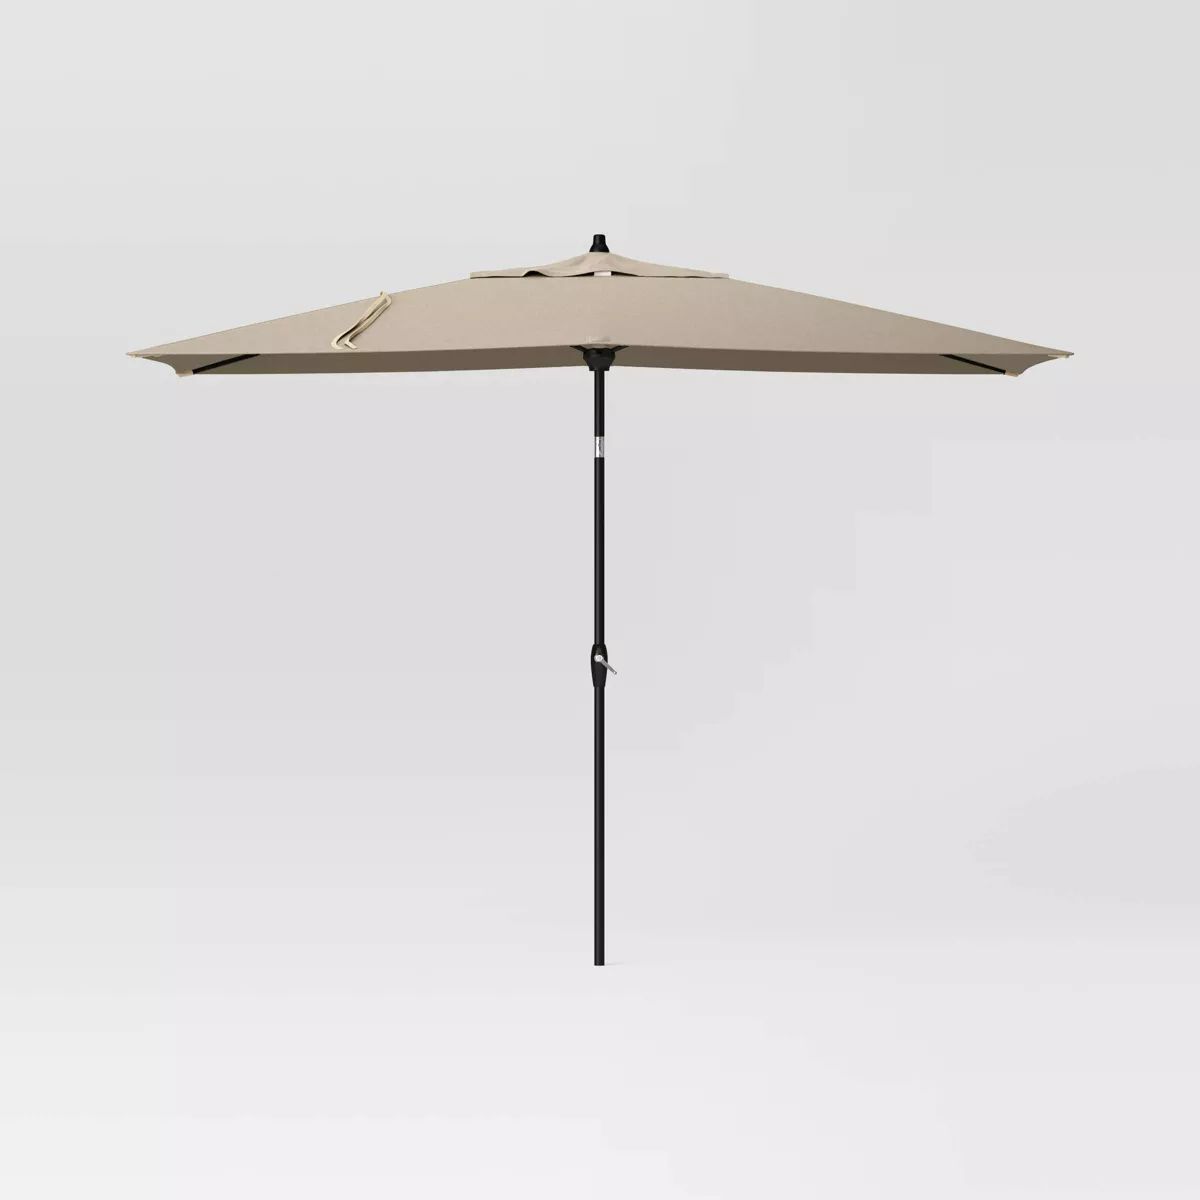 6'x10' Rectangular Outdoor Patio Market Umbrella Tan with Black Pole - Threshold™ | Target